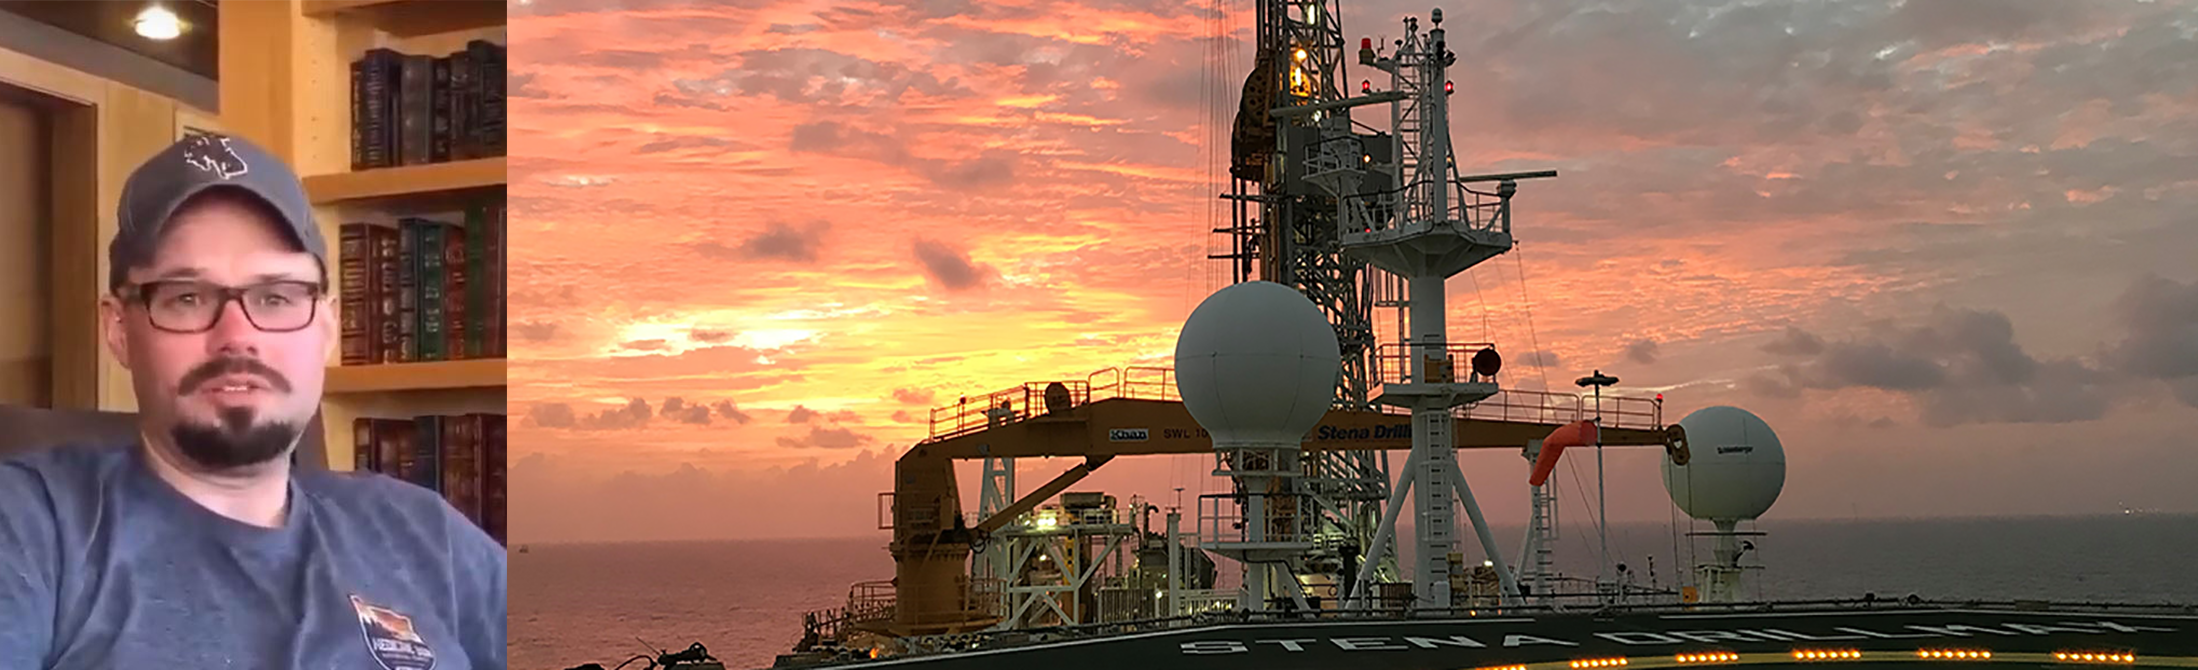 sunset over Will White's oil rig